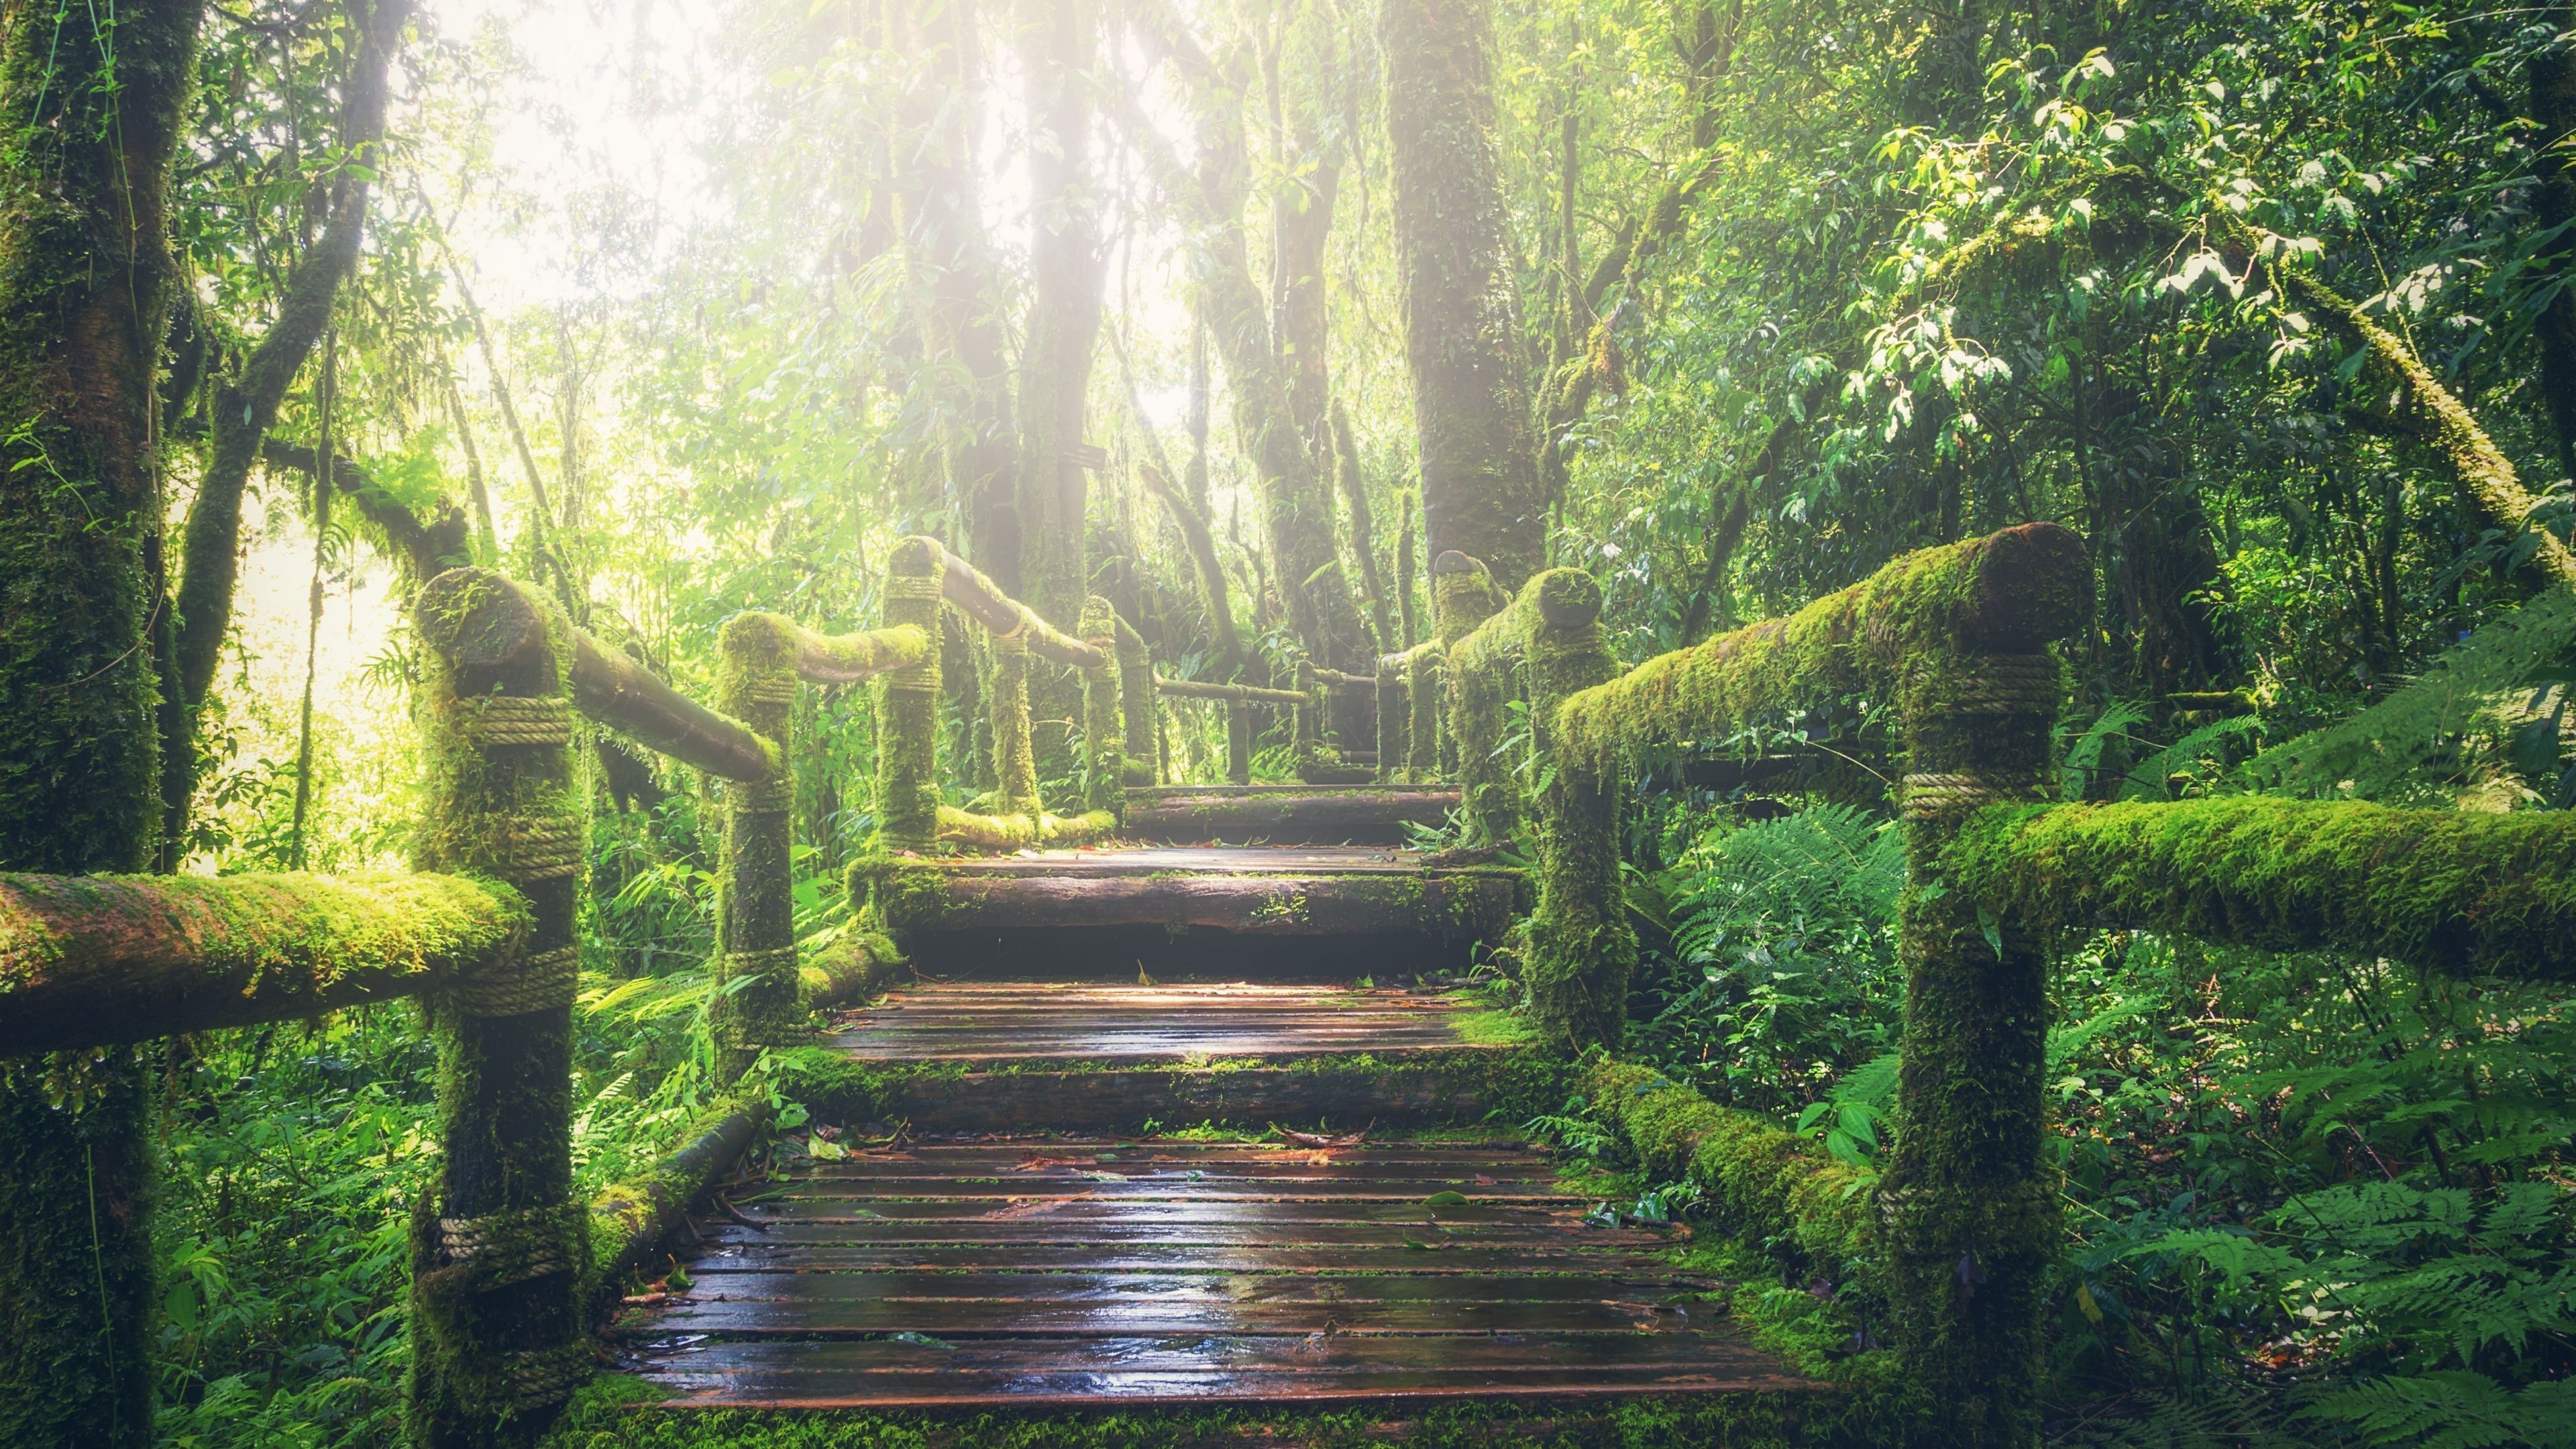 A mossy bridge leads through a dense forest. - Jungle